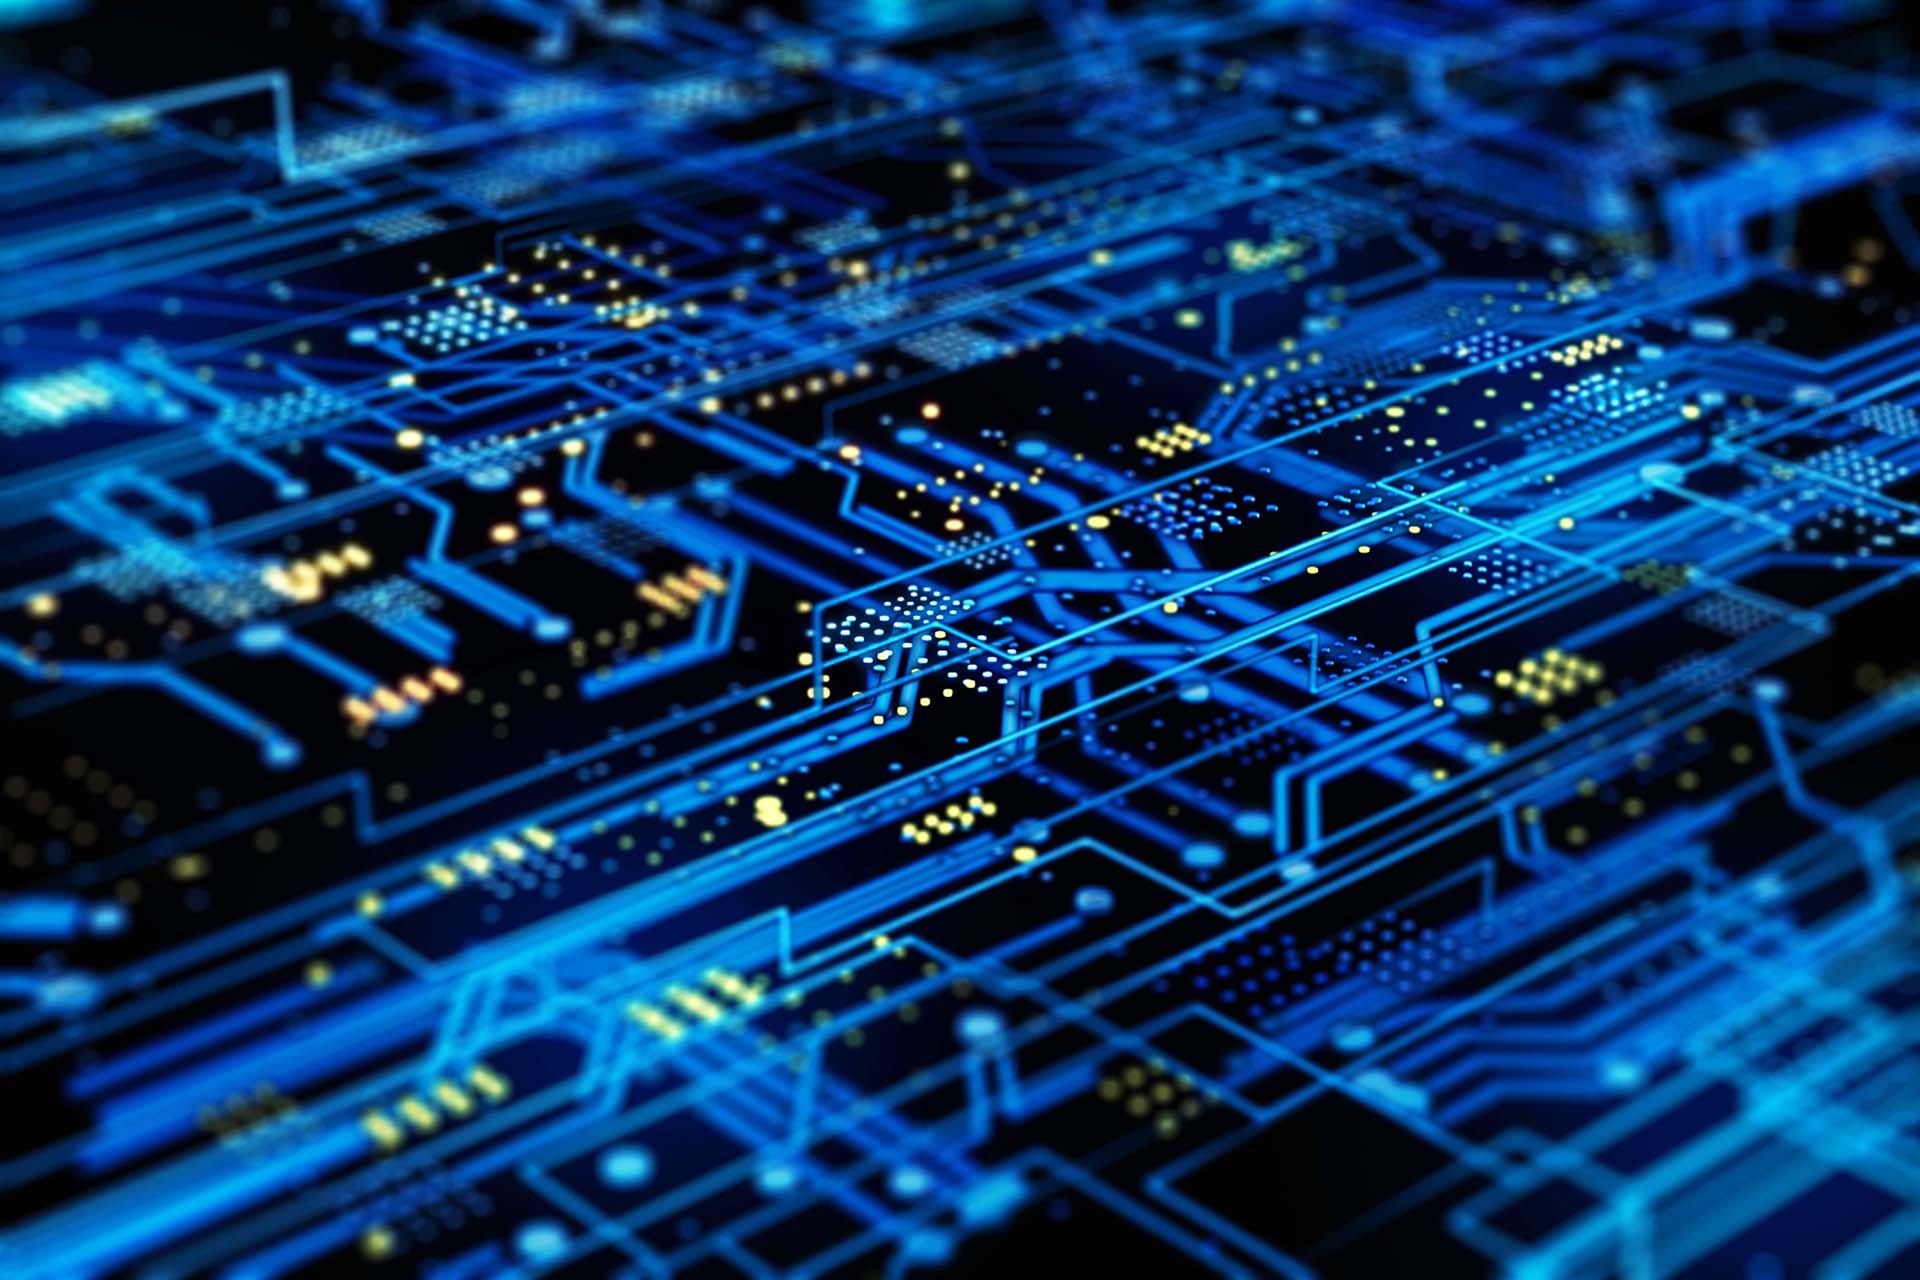 Futuristic circuit board on a dark blue background.